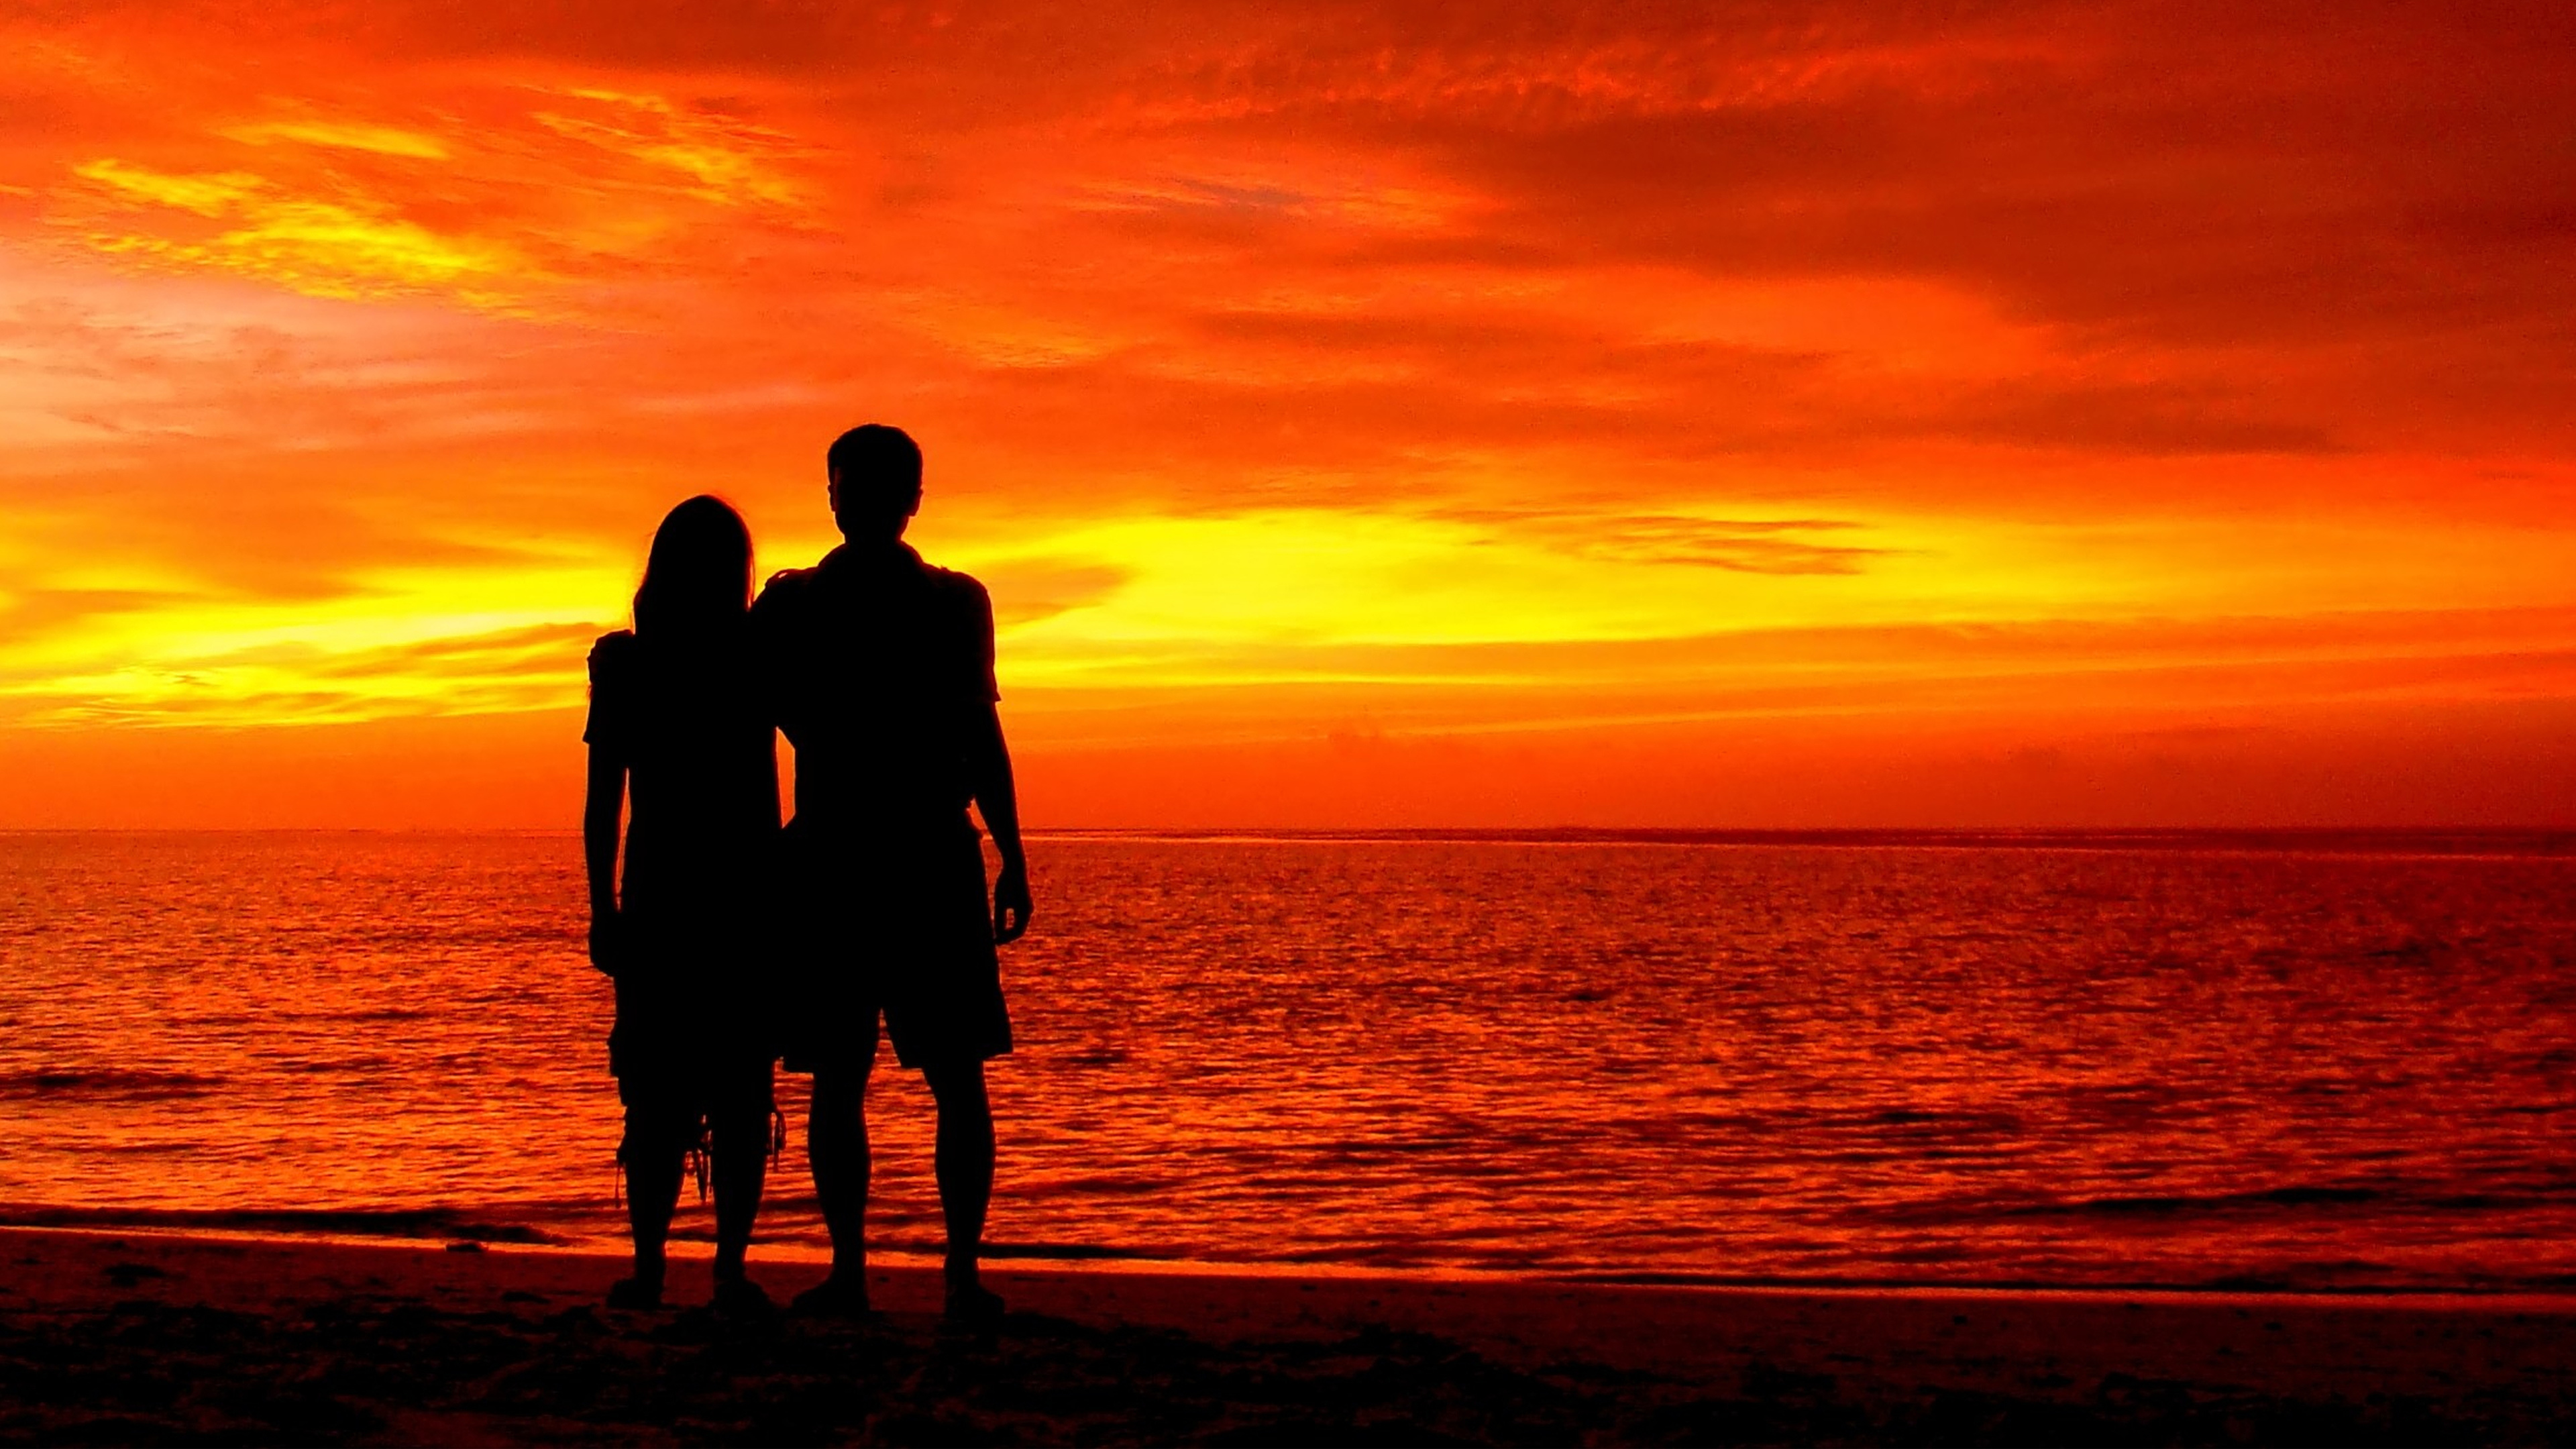 K, #Beach, #Silhouette, #Sunset, #Romantic, #Couple